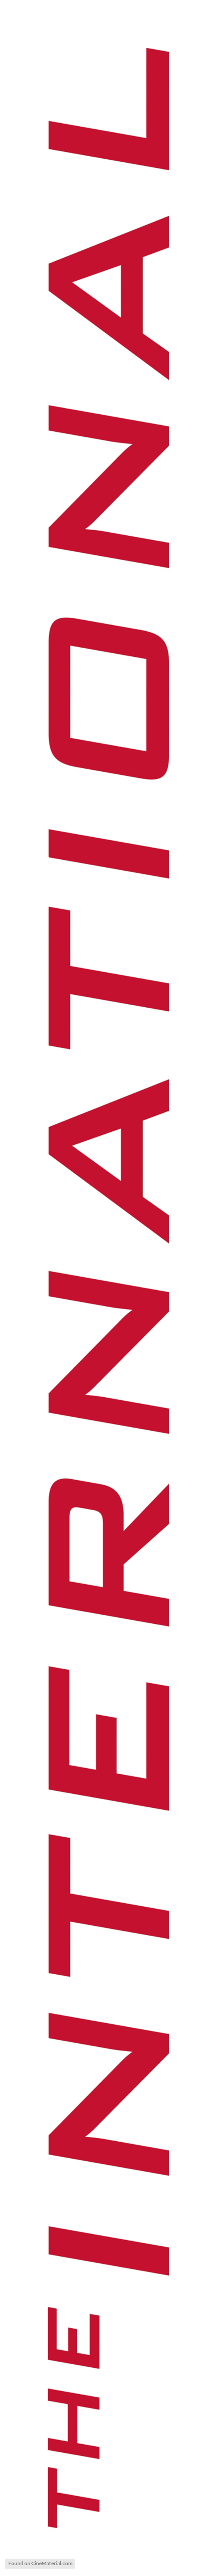 The International - Logo